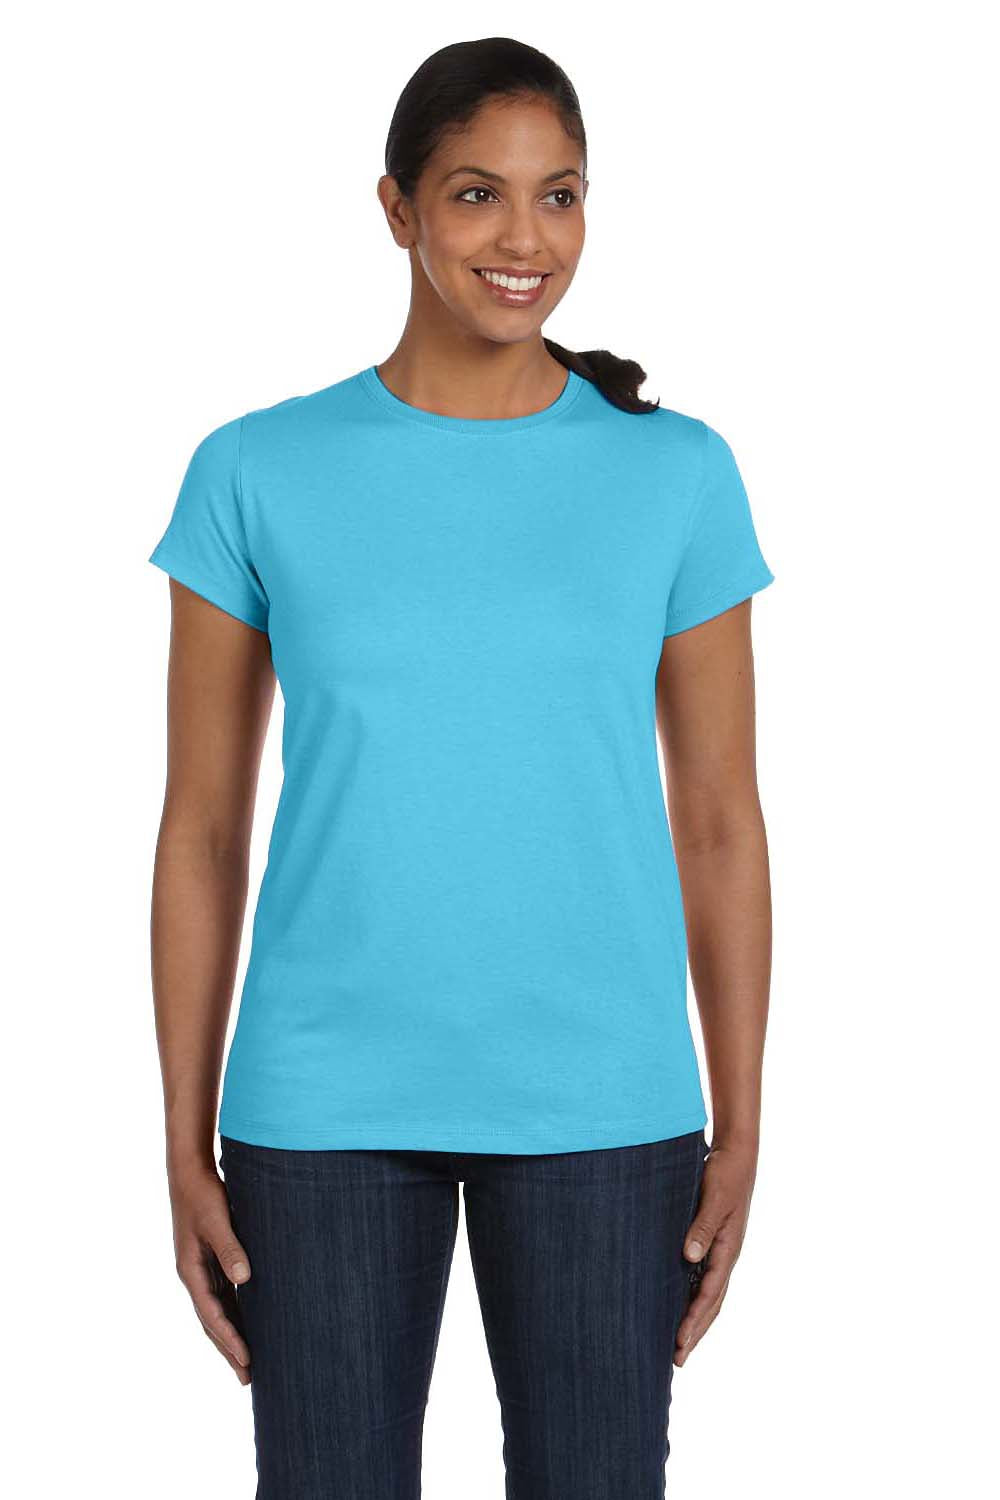 Hanes 5680 Womens ComfortSoft Short Sleeve Crewneck T-Shirt Blue Horizon Front